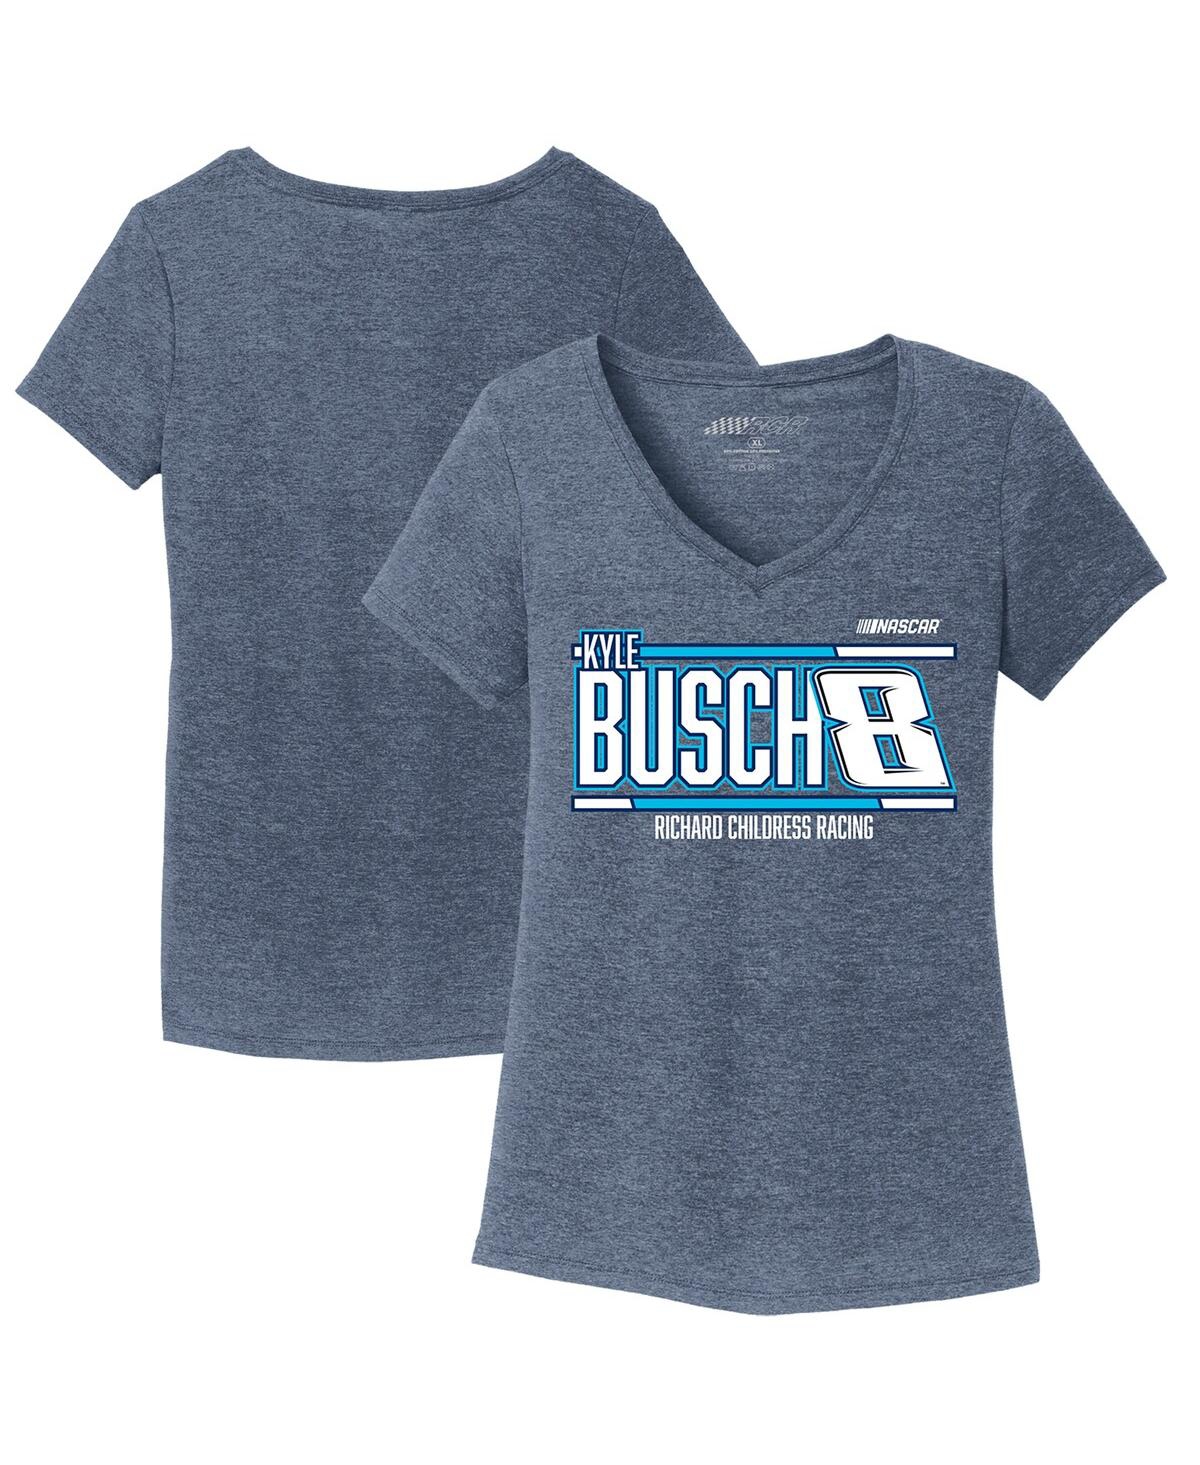 Women's Richard Childress Racing Team Collection Navy Kyle Busch Tri-Blend V-Neck T-shirt - Navy